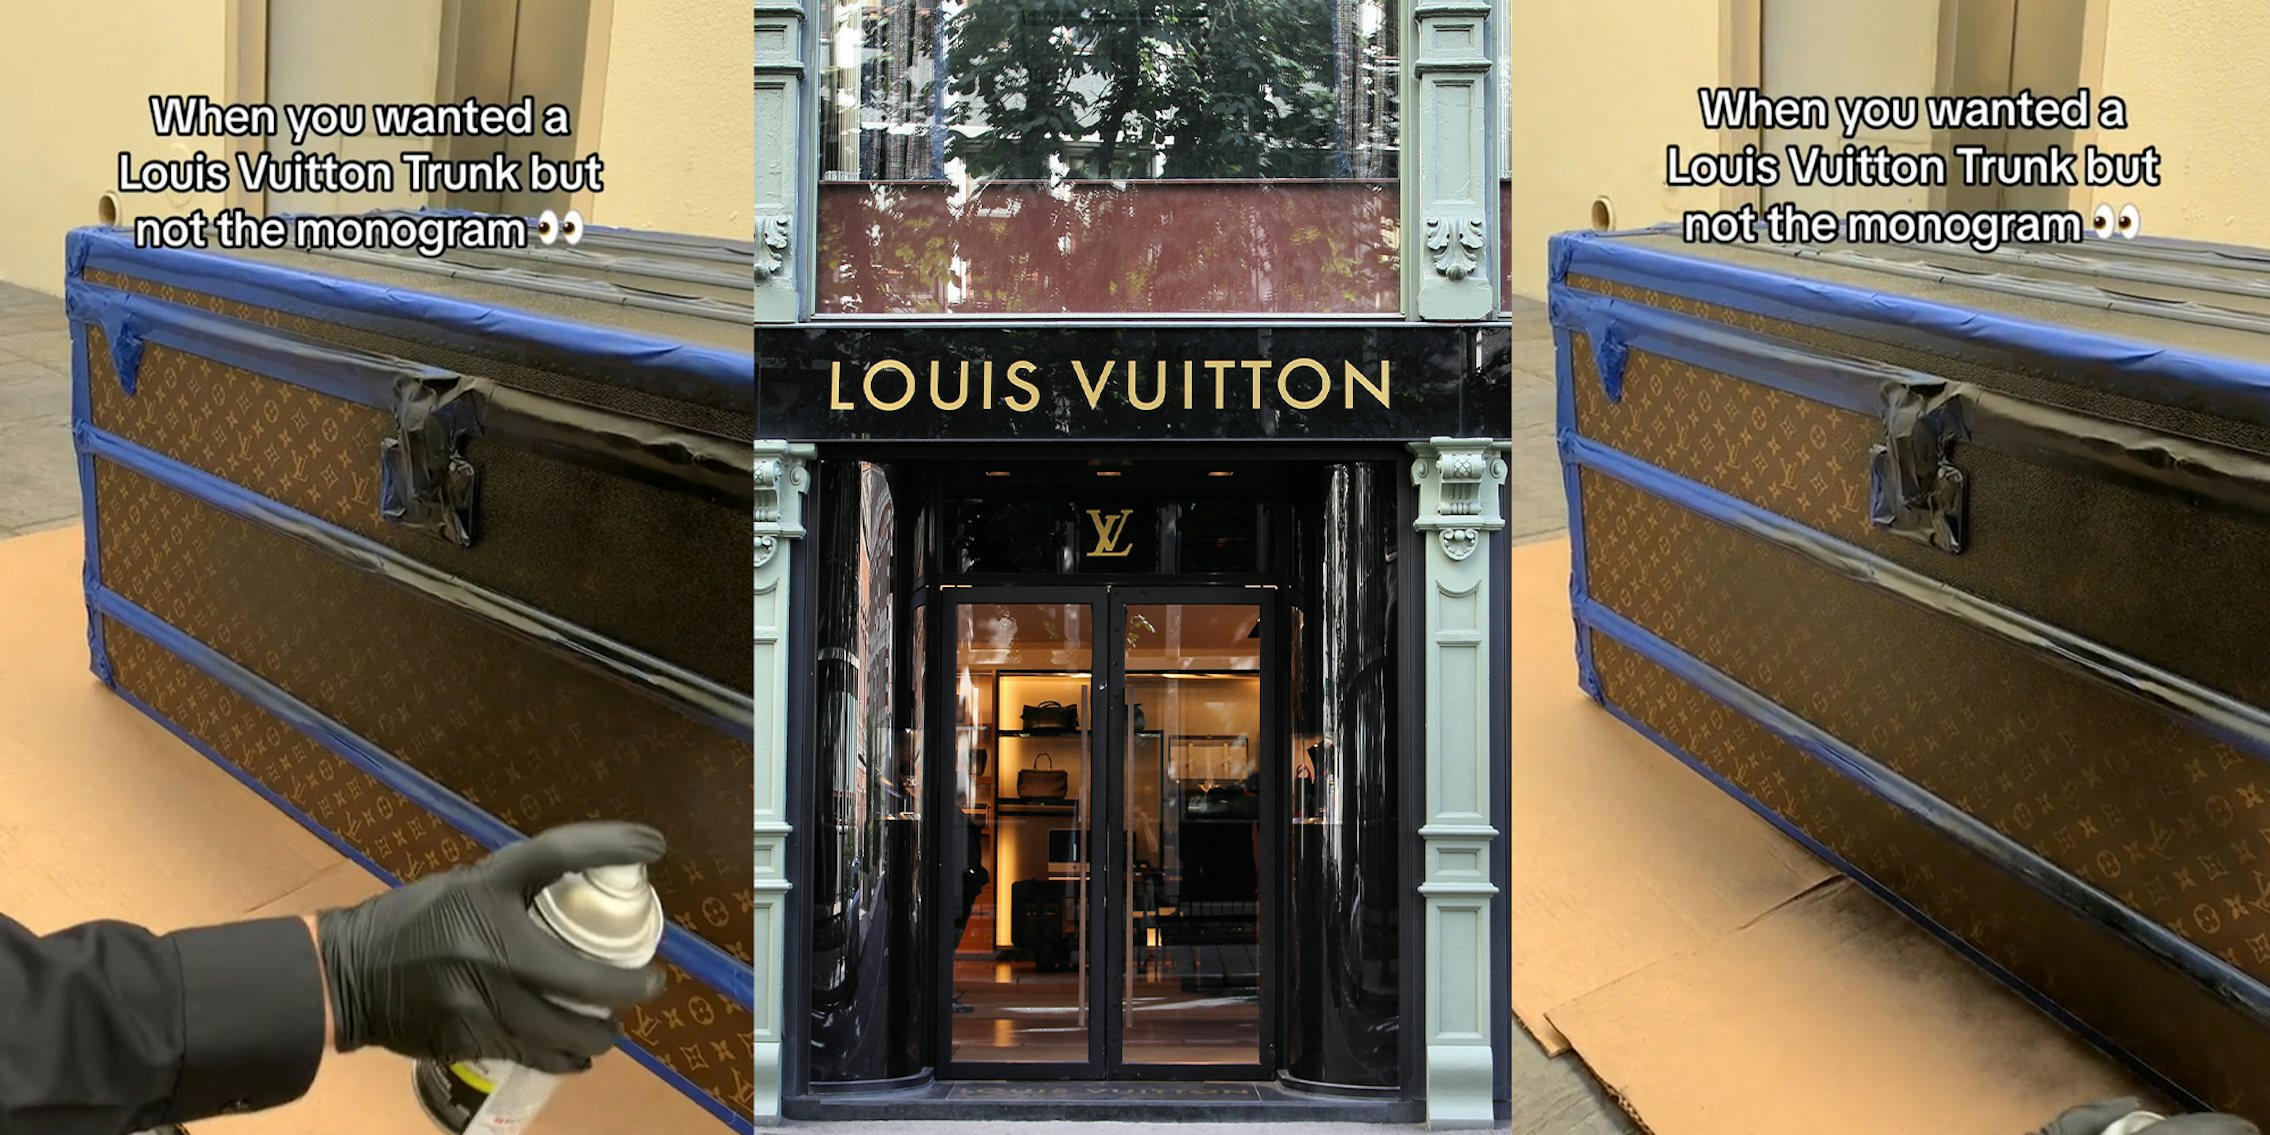 Work in progress on this custom Louis Vuitton vanity trunk 🌸 #artist